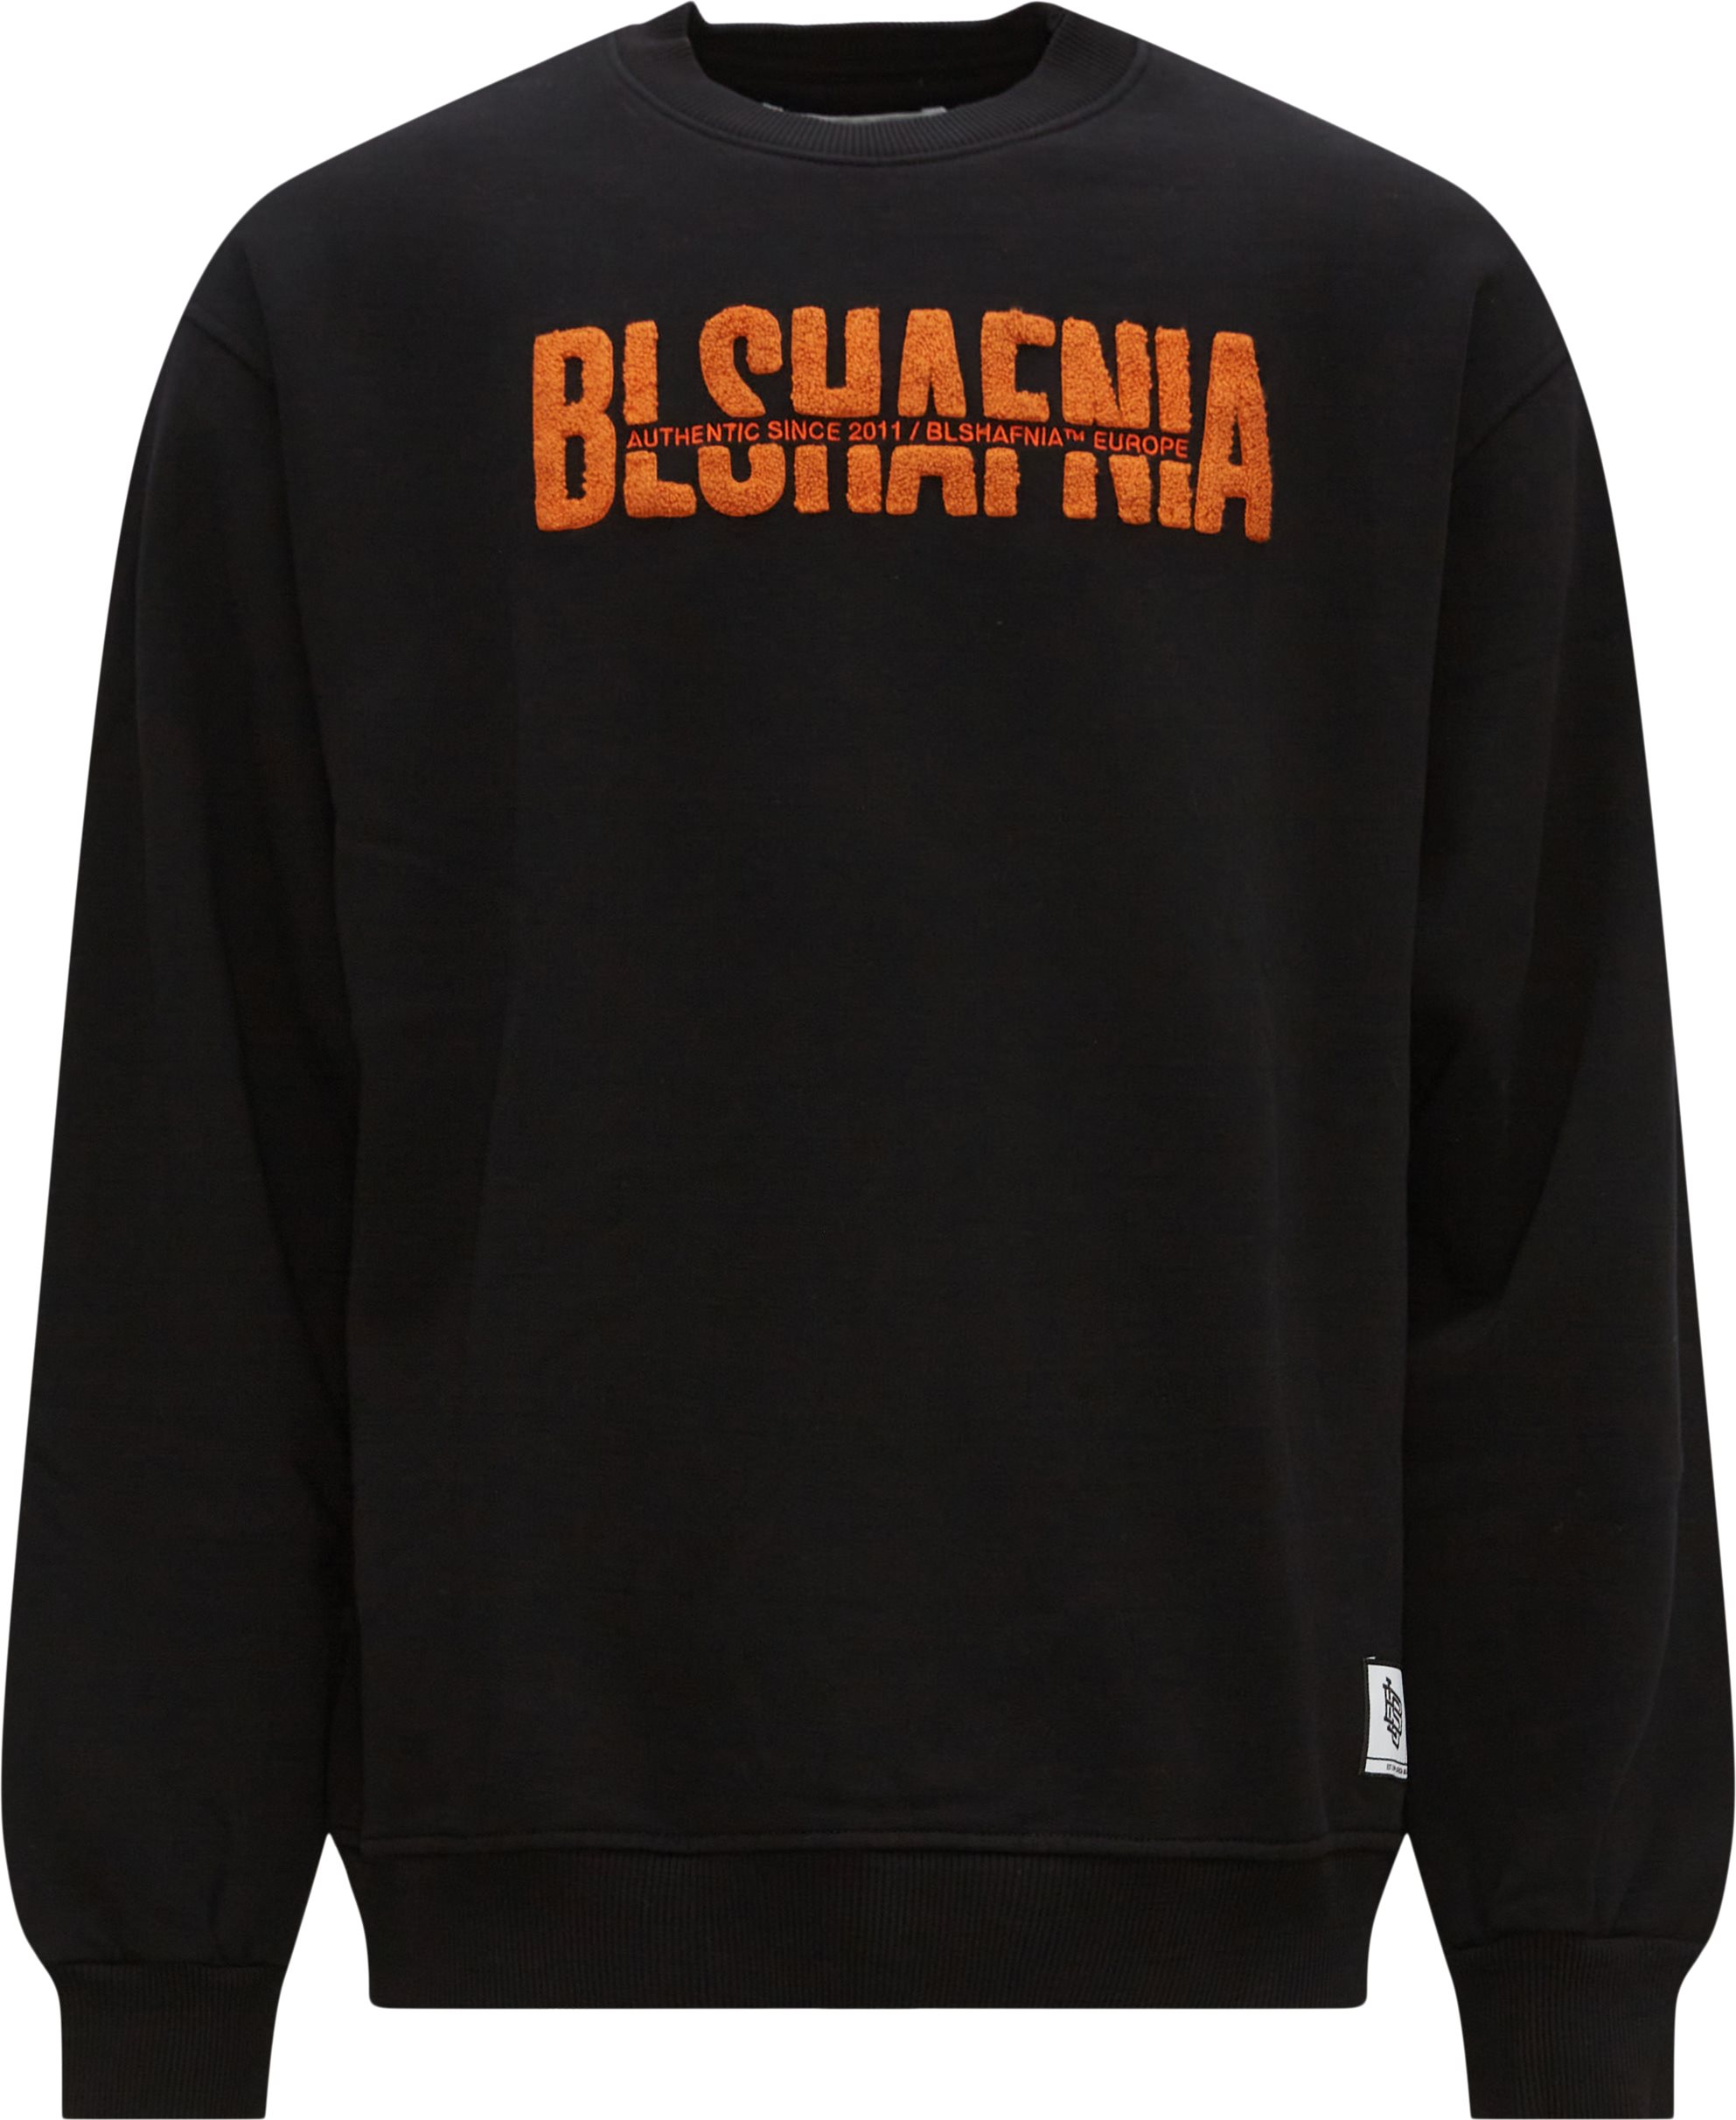 BLS Sweatshirts TRANSPERANCY CREW NECK Black